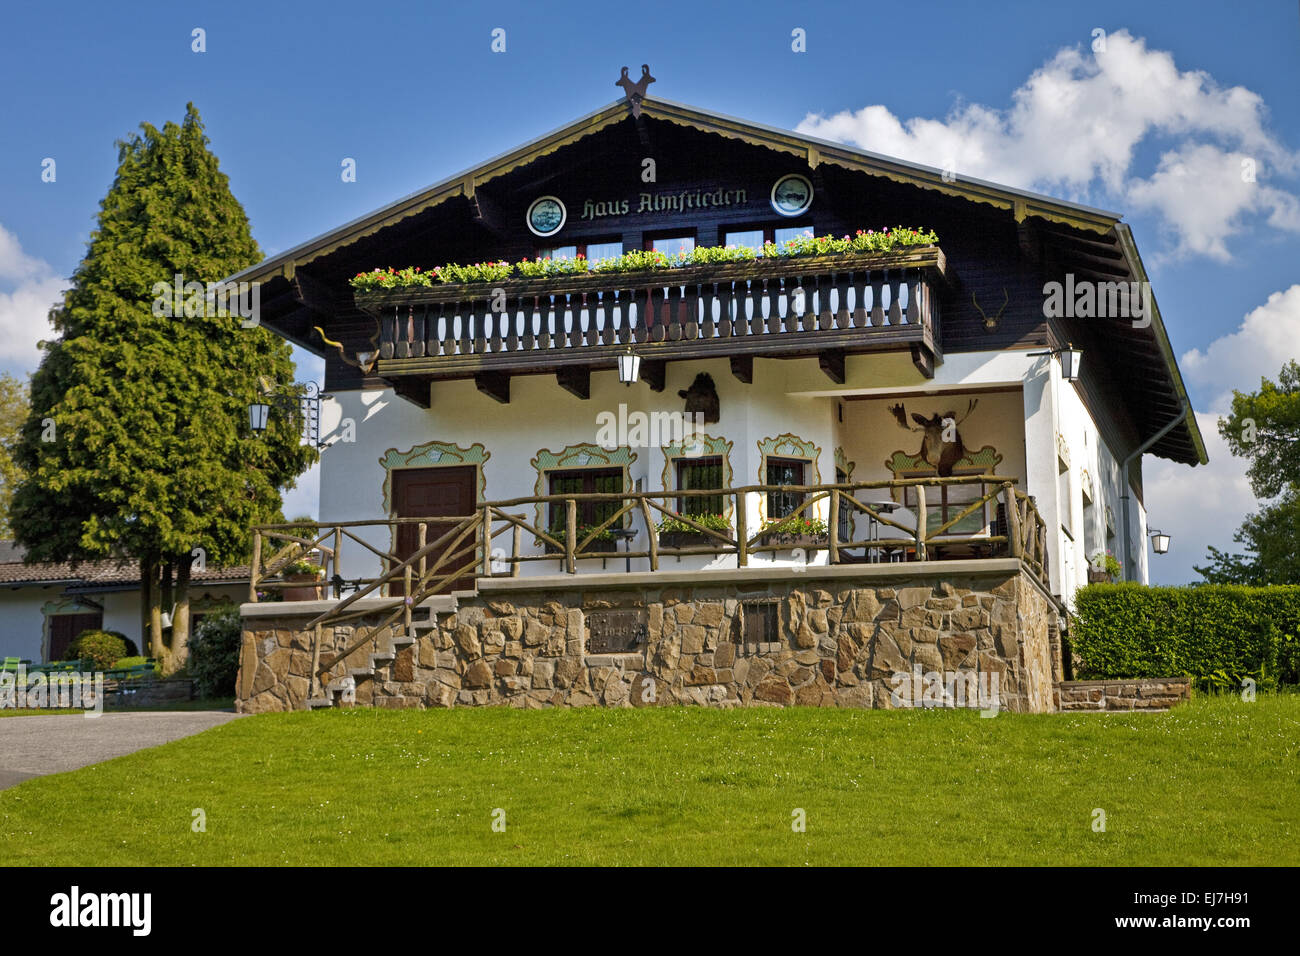 House Almfrieden, Witten, Germany Stock Photo